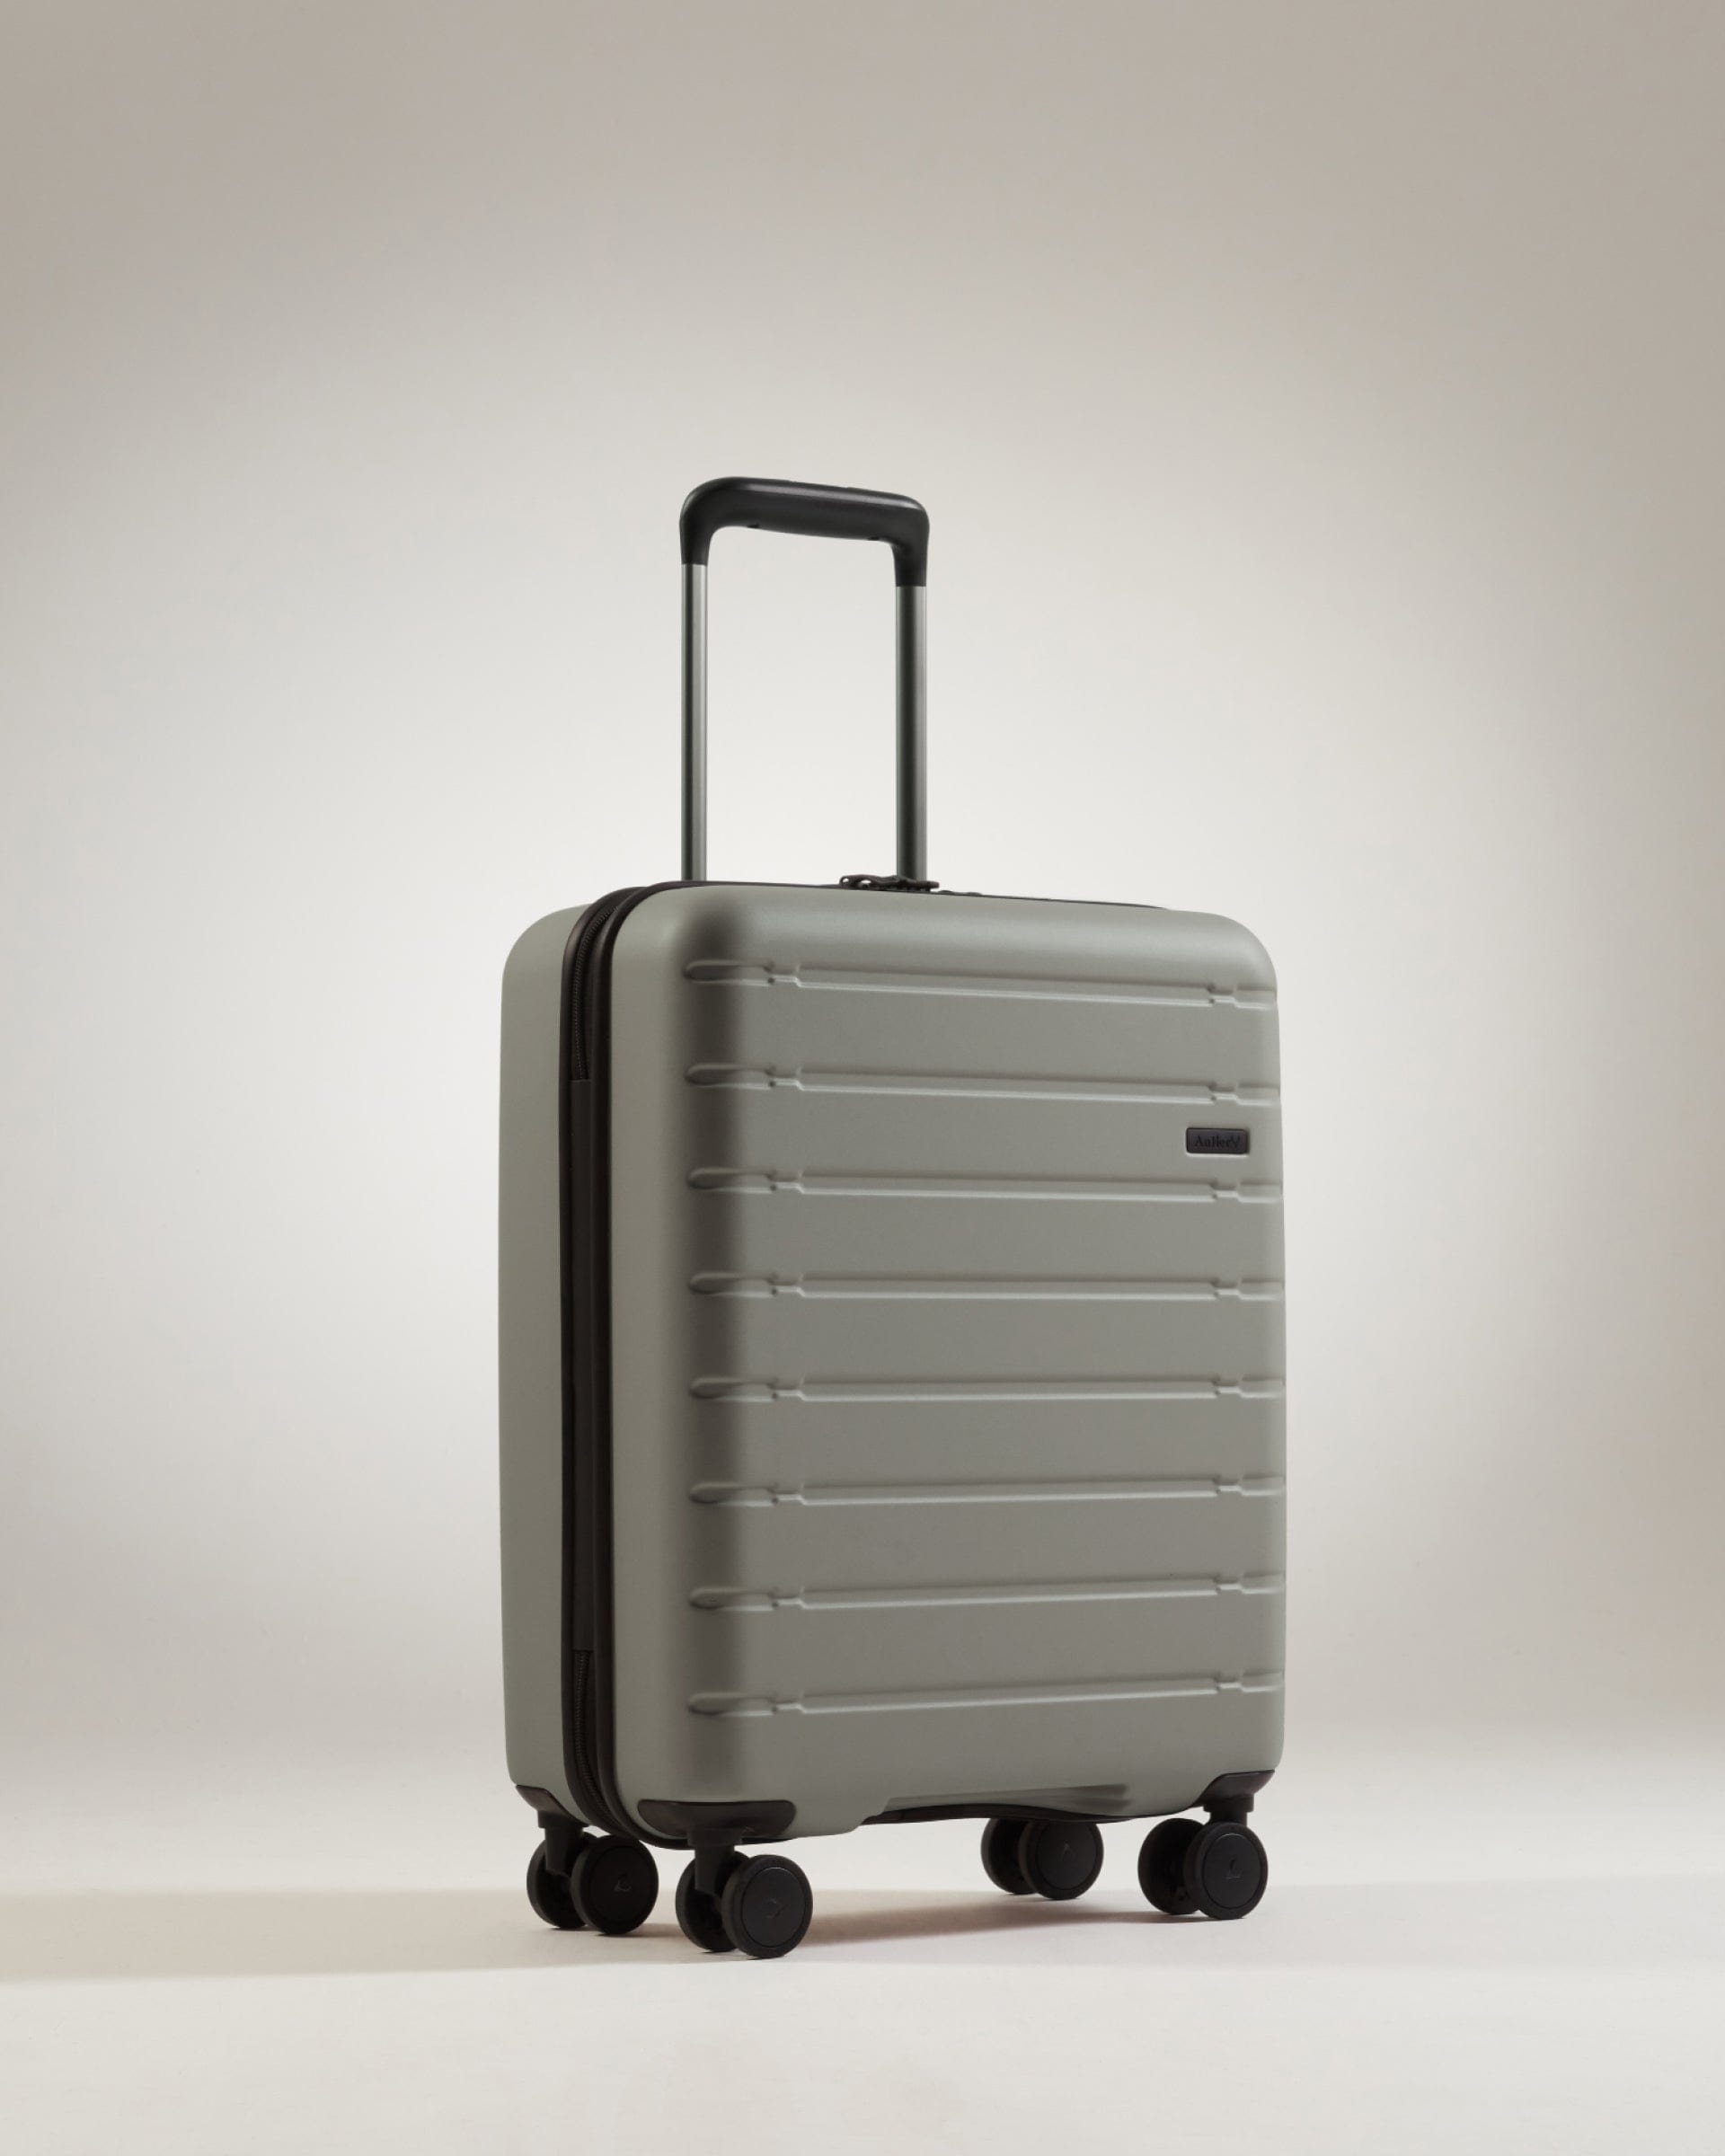 View Antler Stamford Cabin Suitcase In Khaki Size 541 x 402 x 20 cm information